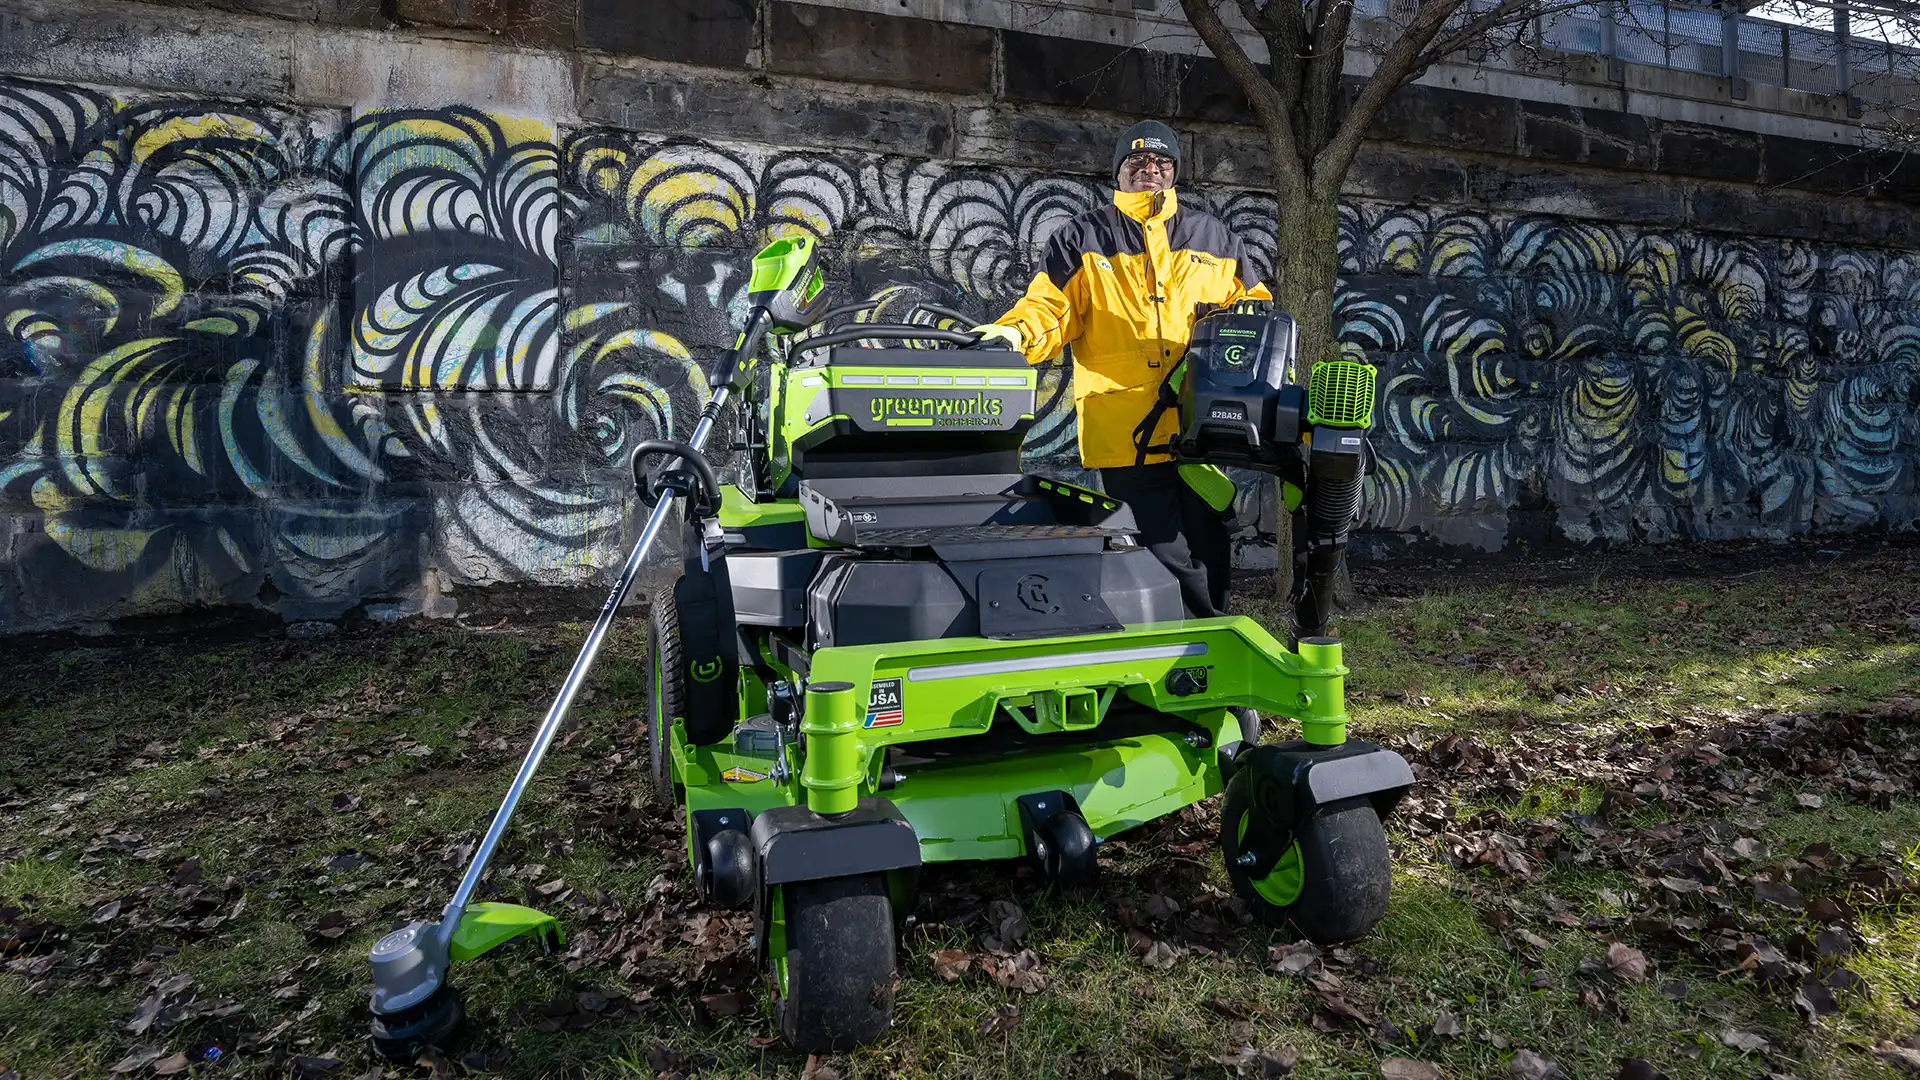 An NDD worker mowing a lawn